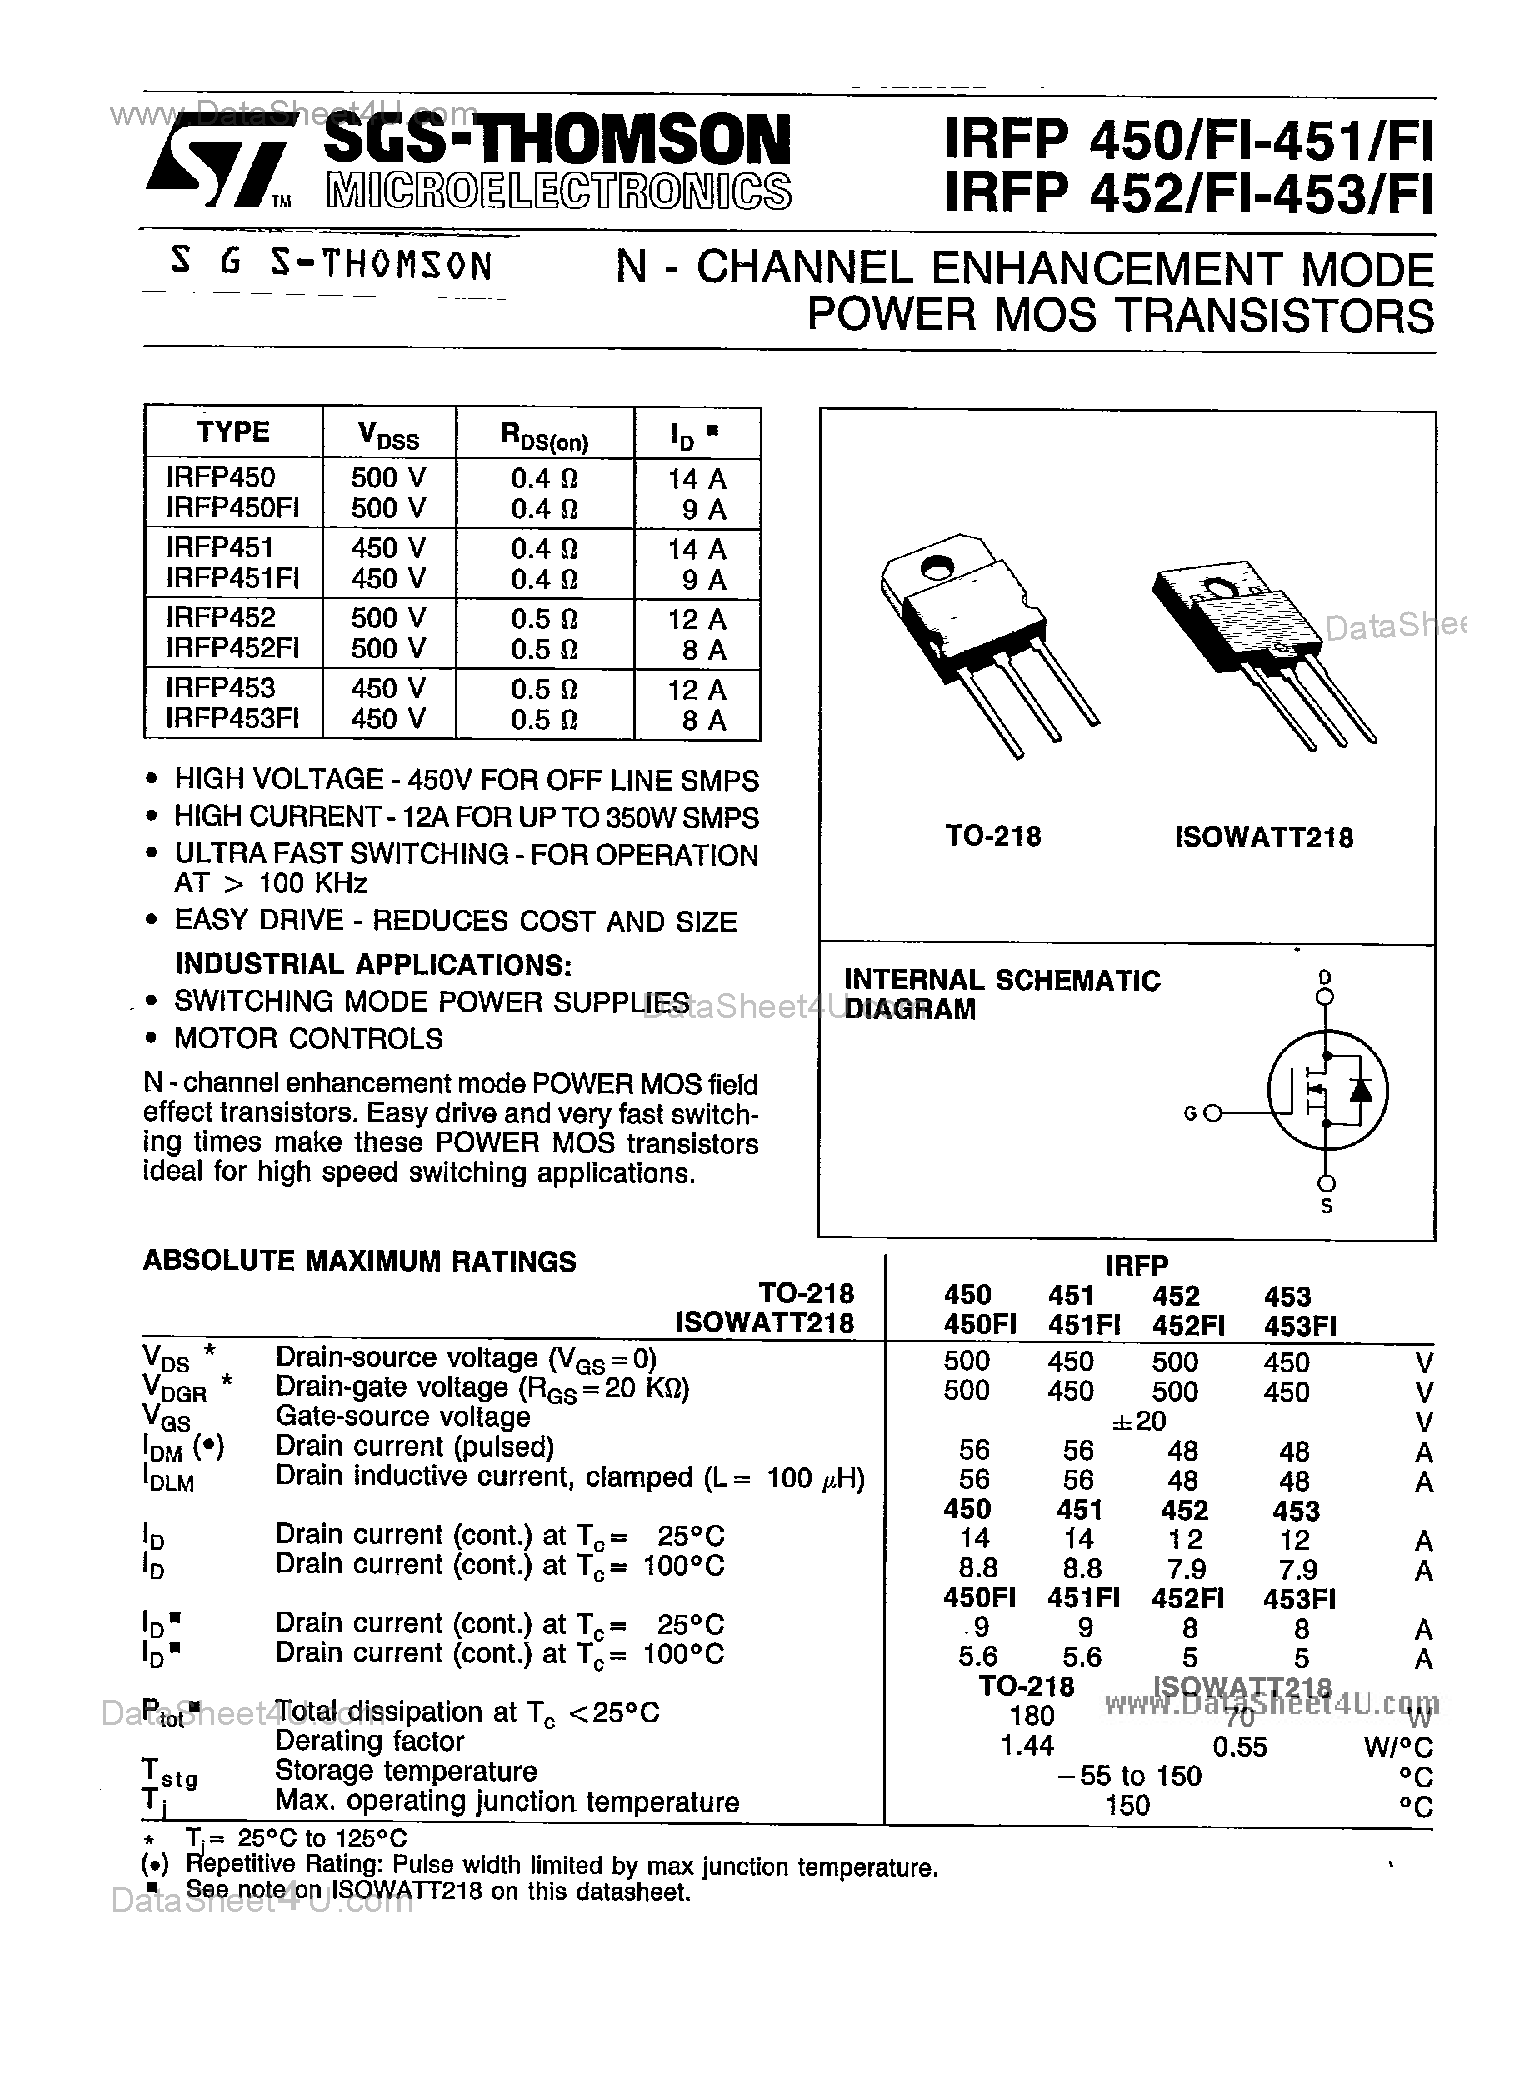 Datasheet IRFP450 - (IRFP450 - IRFP453) N-Channel Enhancement Mode Power MOS Transistors page 1